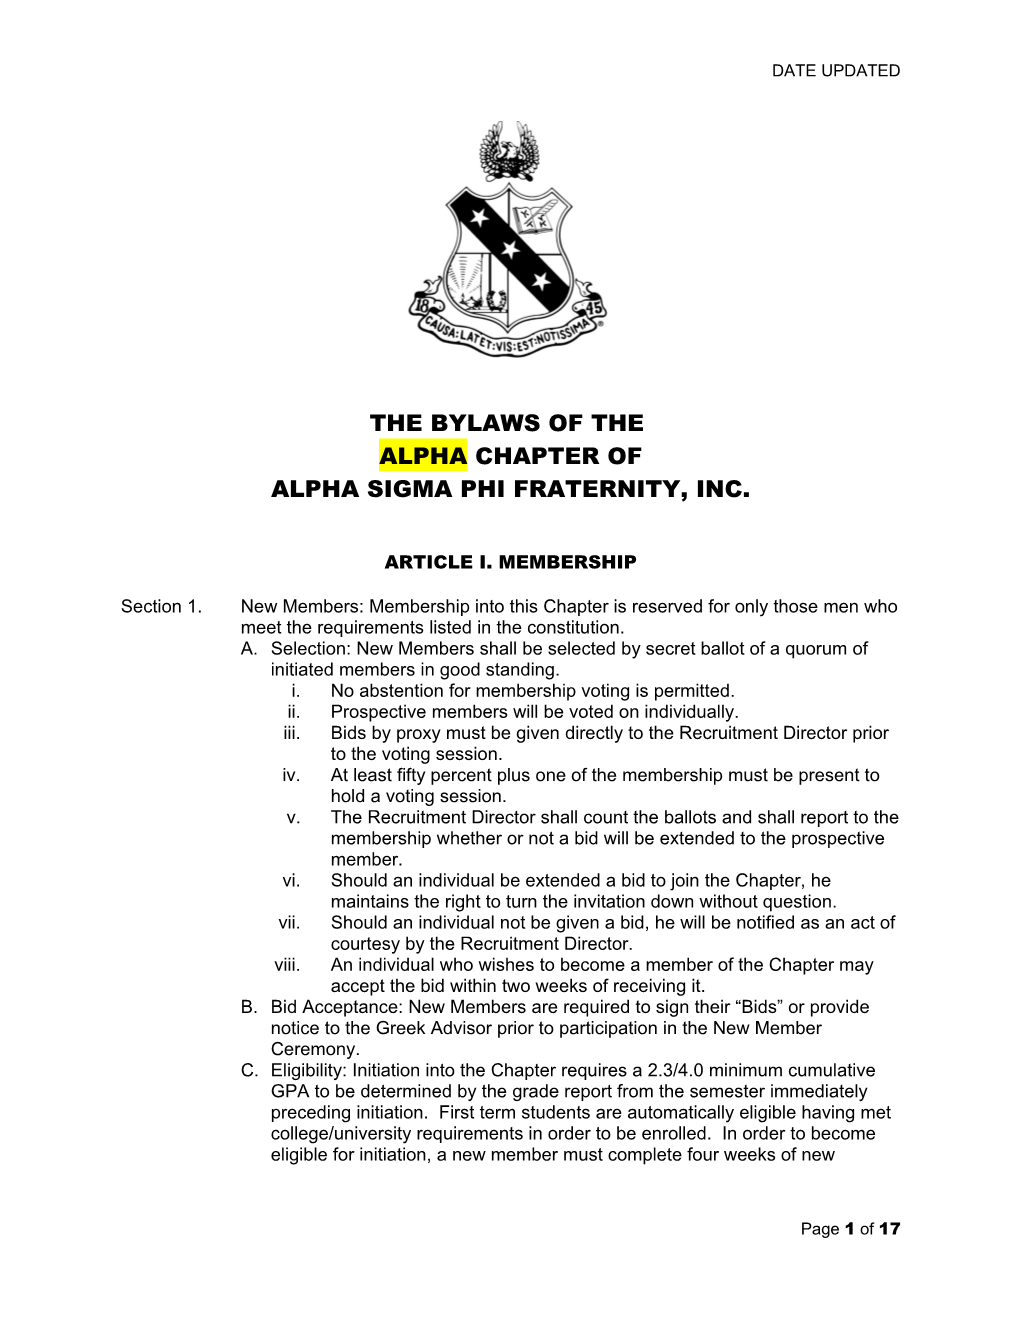 Alpha Sigma Phi Fraternity, Inc